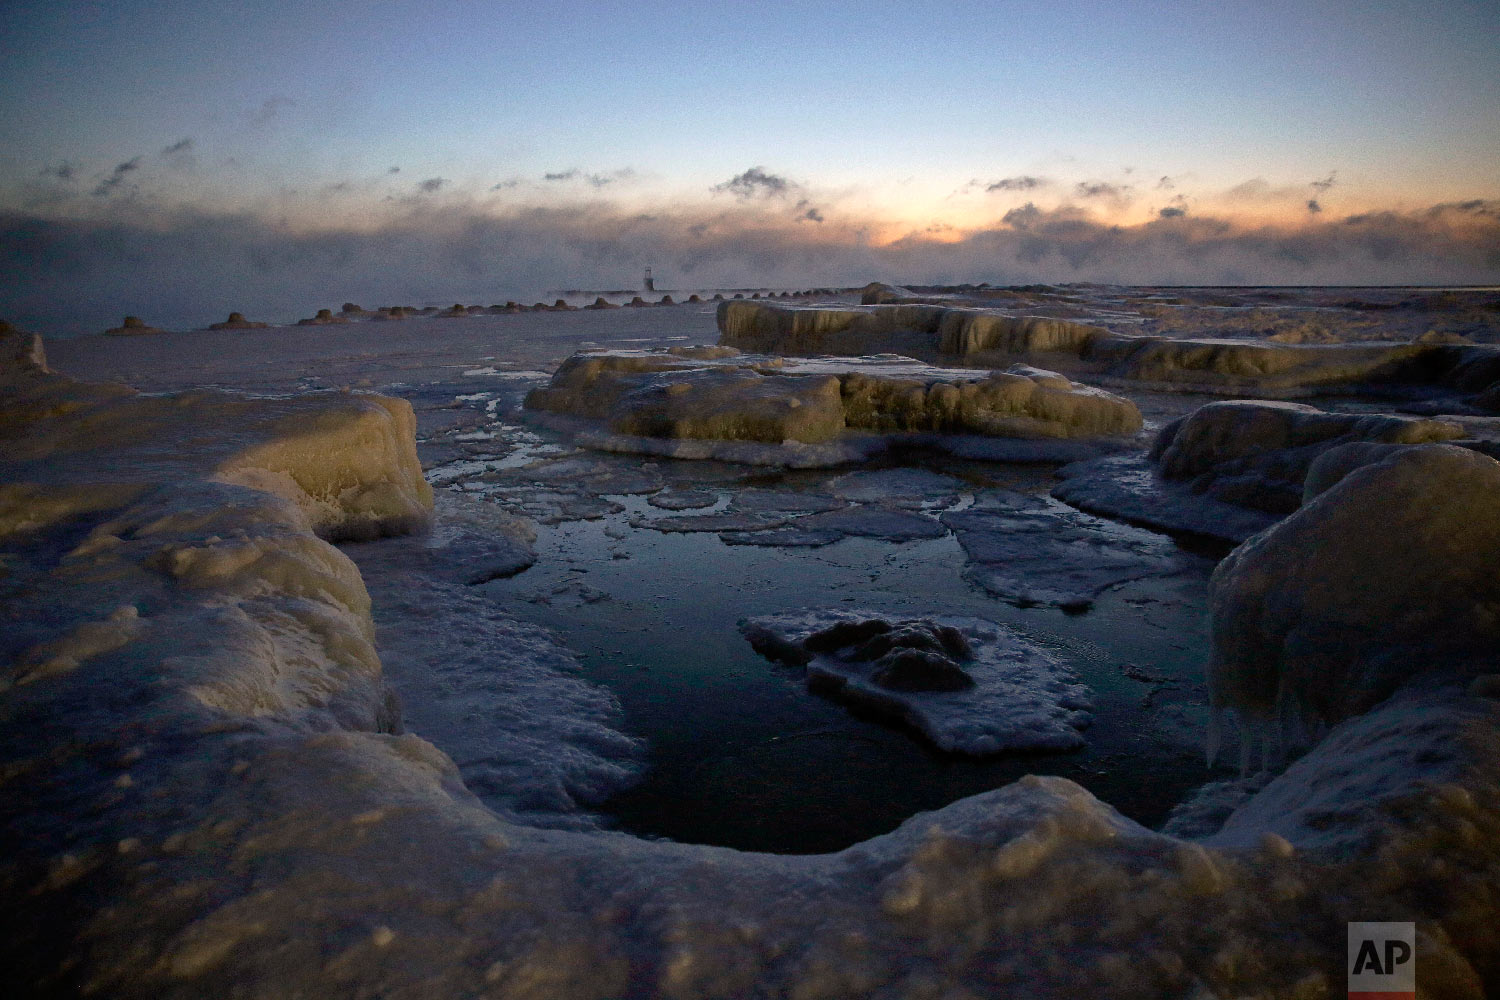  Ice forms along the shore of Lake Michigan before sunrise, Wednesday, Jan. 30, 2019, in Chicago. (AP Photo/Kiichiro Sato) 